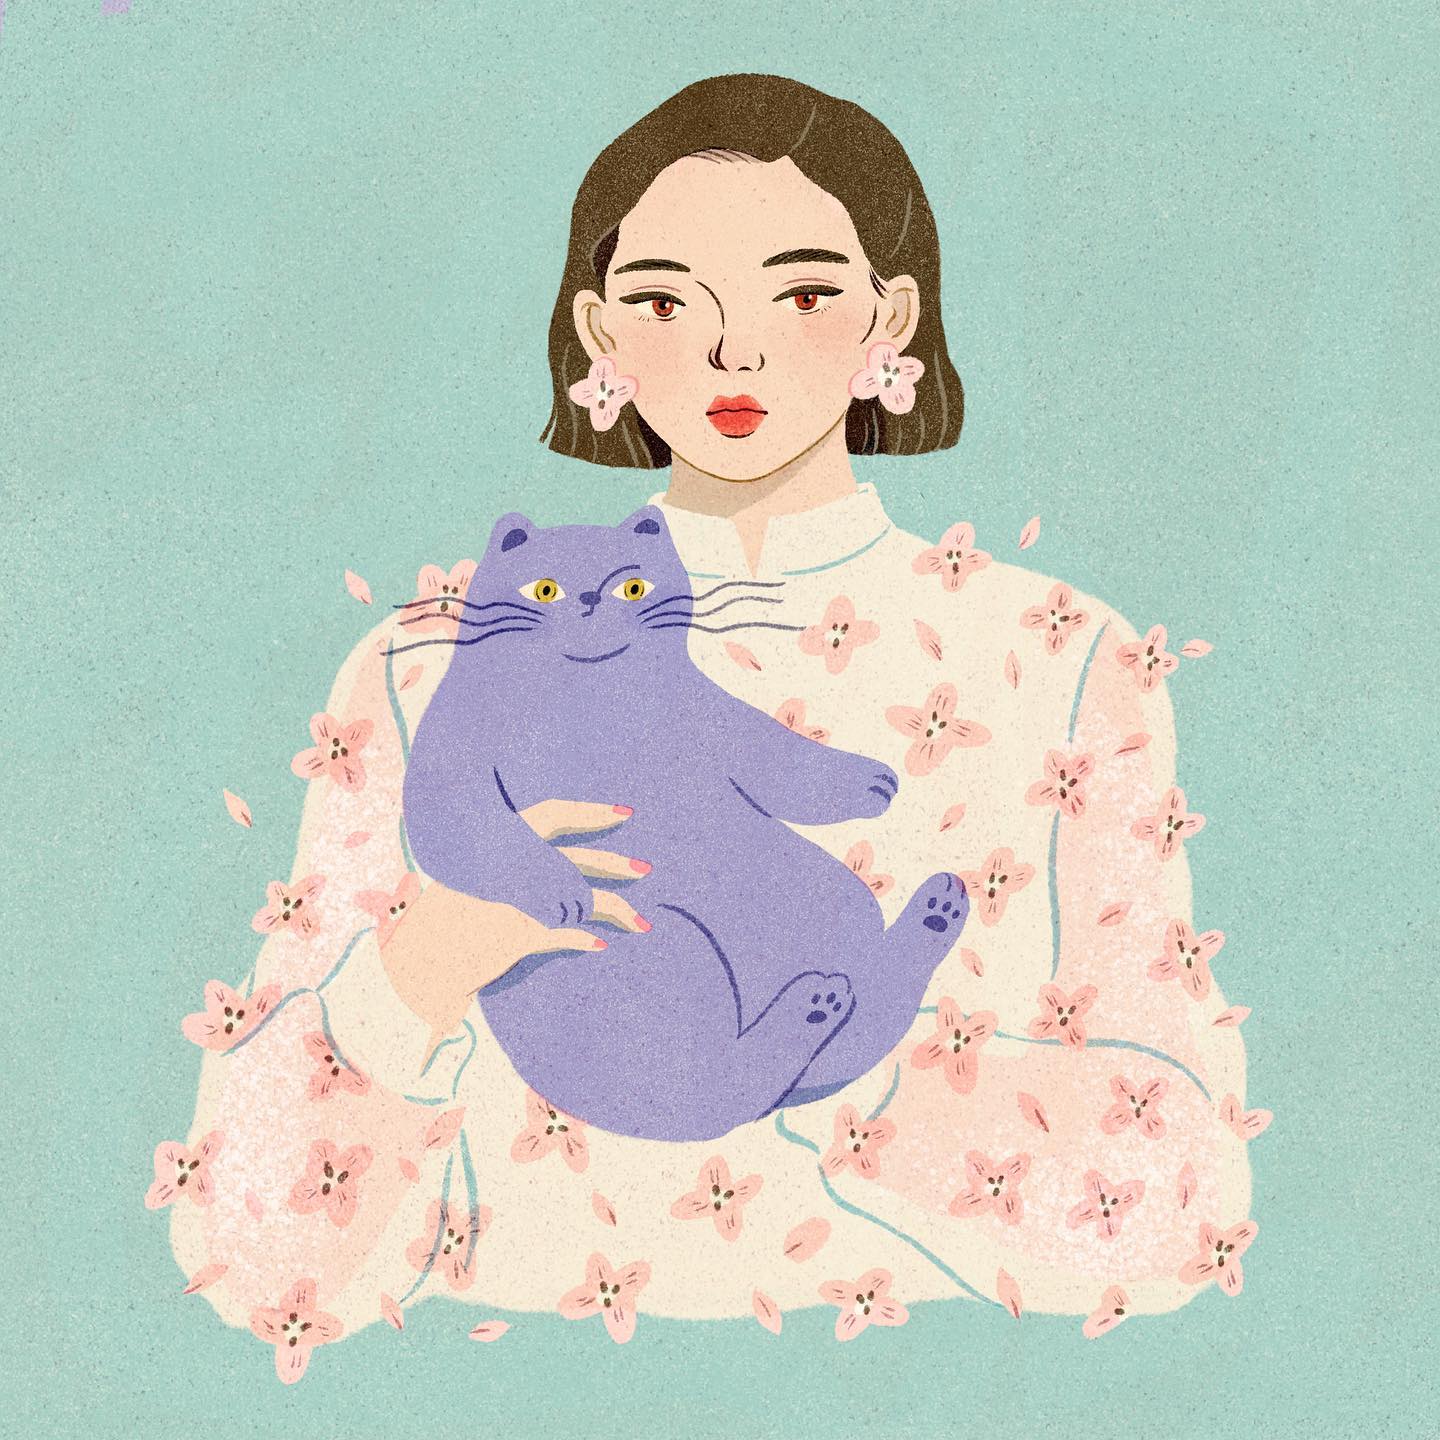 Woman and cat illustration by Tess Tseng